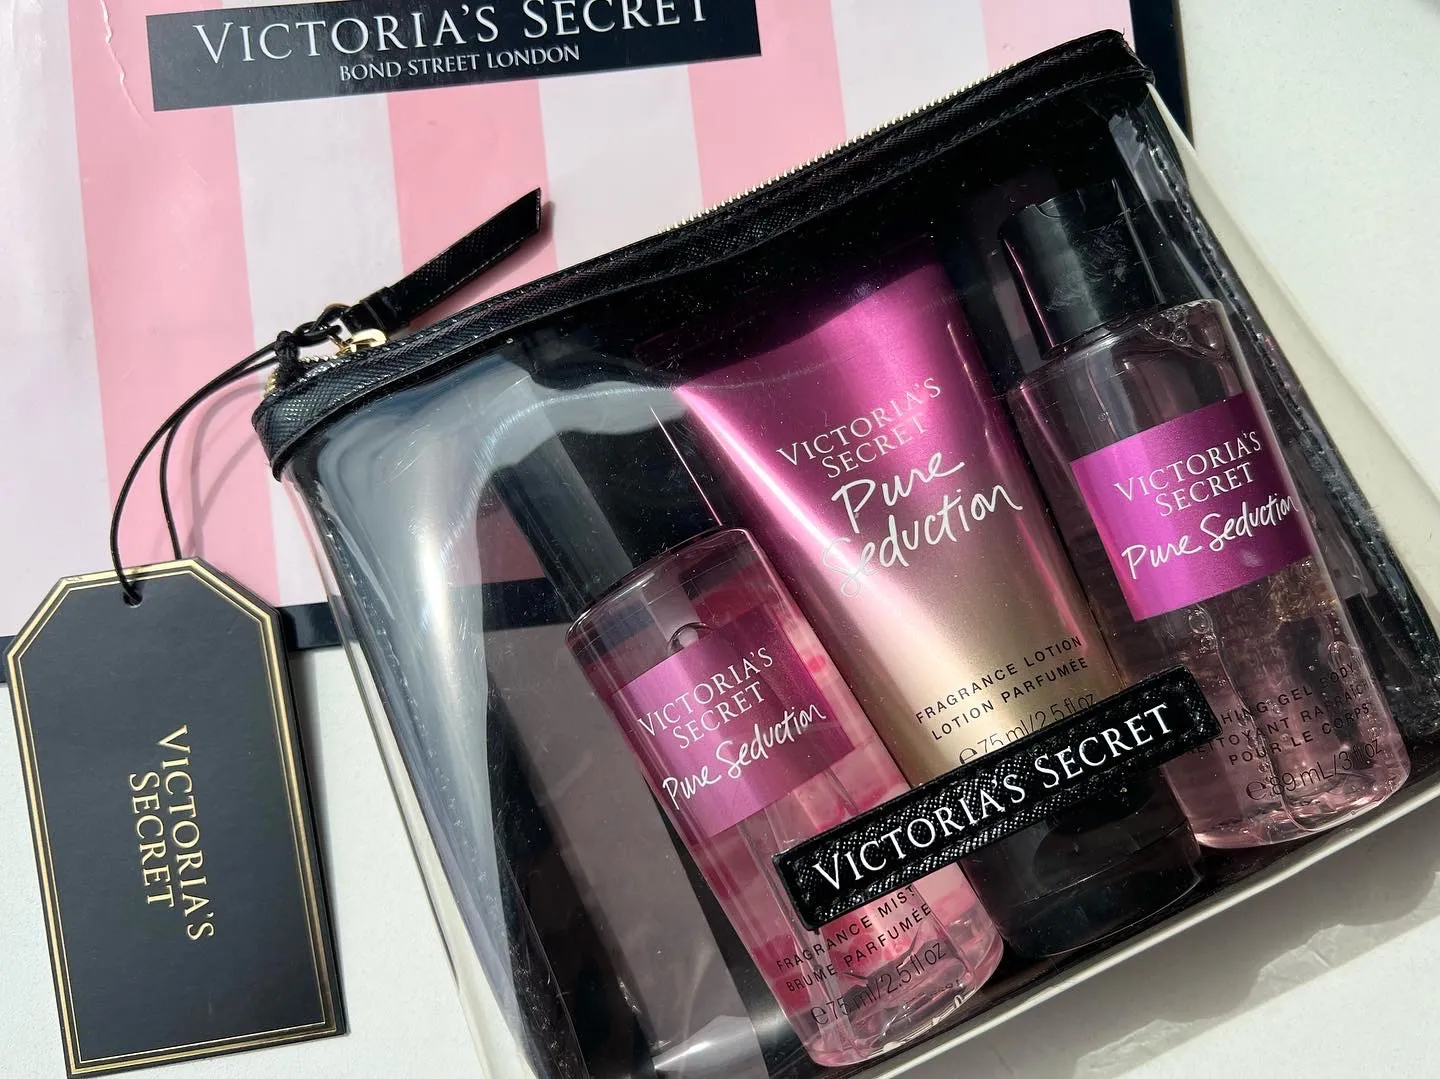 Kit Victoria's Secret Pure seduction body splash 75ml + creme hidratante  75ml + gel de banho 75ml + necessarie – Le Parfum